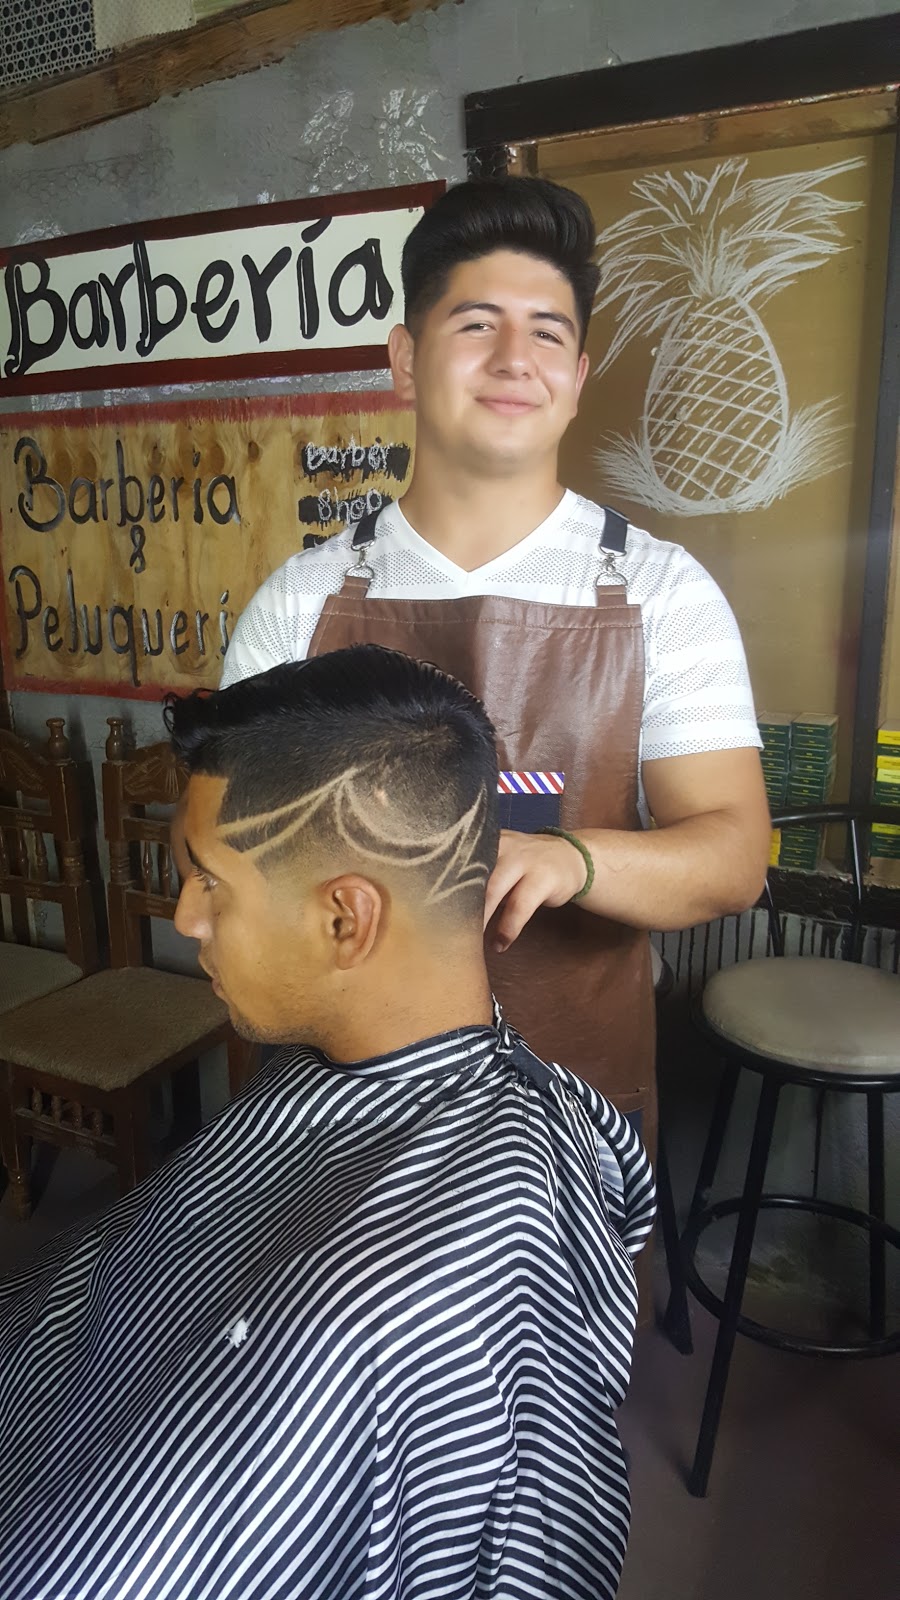 Blessed, barbería tradicional. | Calle, Crisoforo Caballero 11520, km 29, Cd Juárez, Chih., Mexico | Phone: 656 765 6769